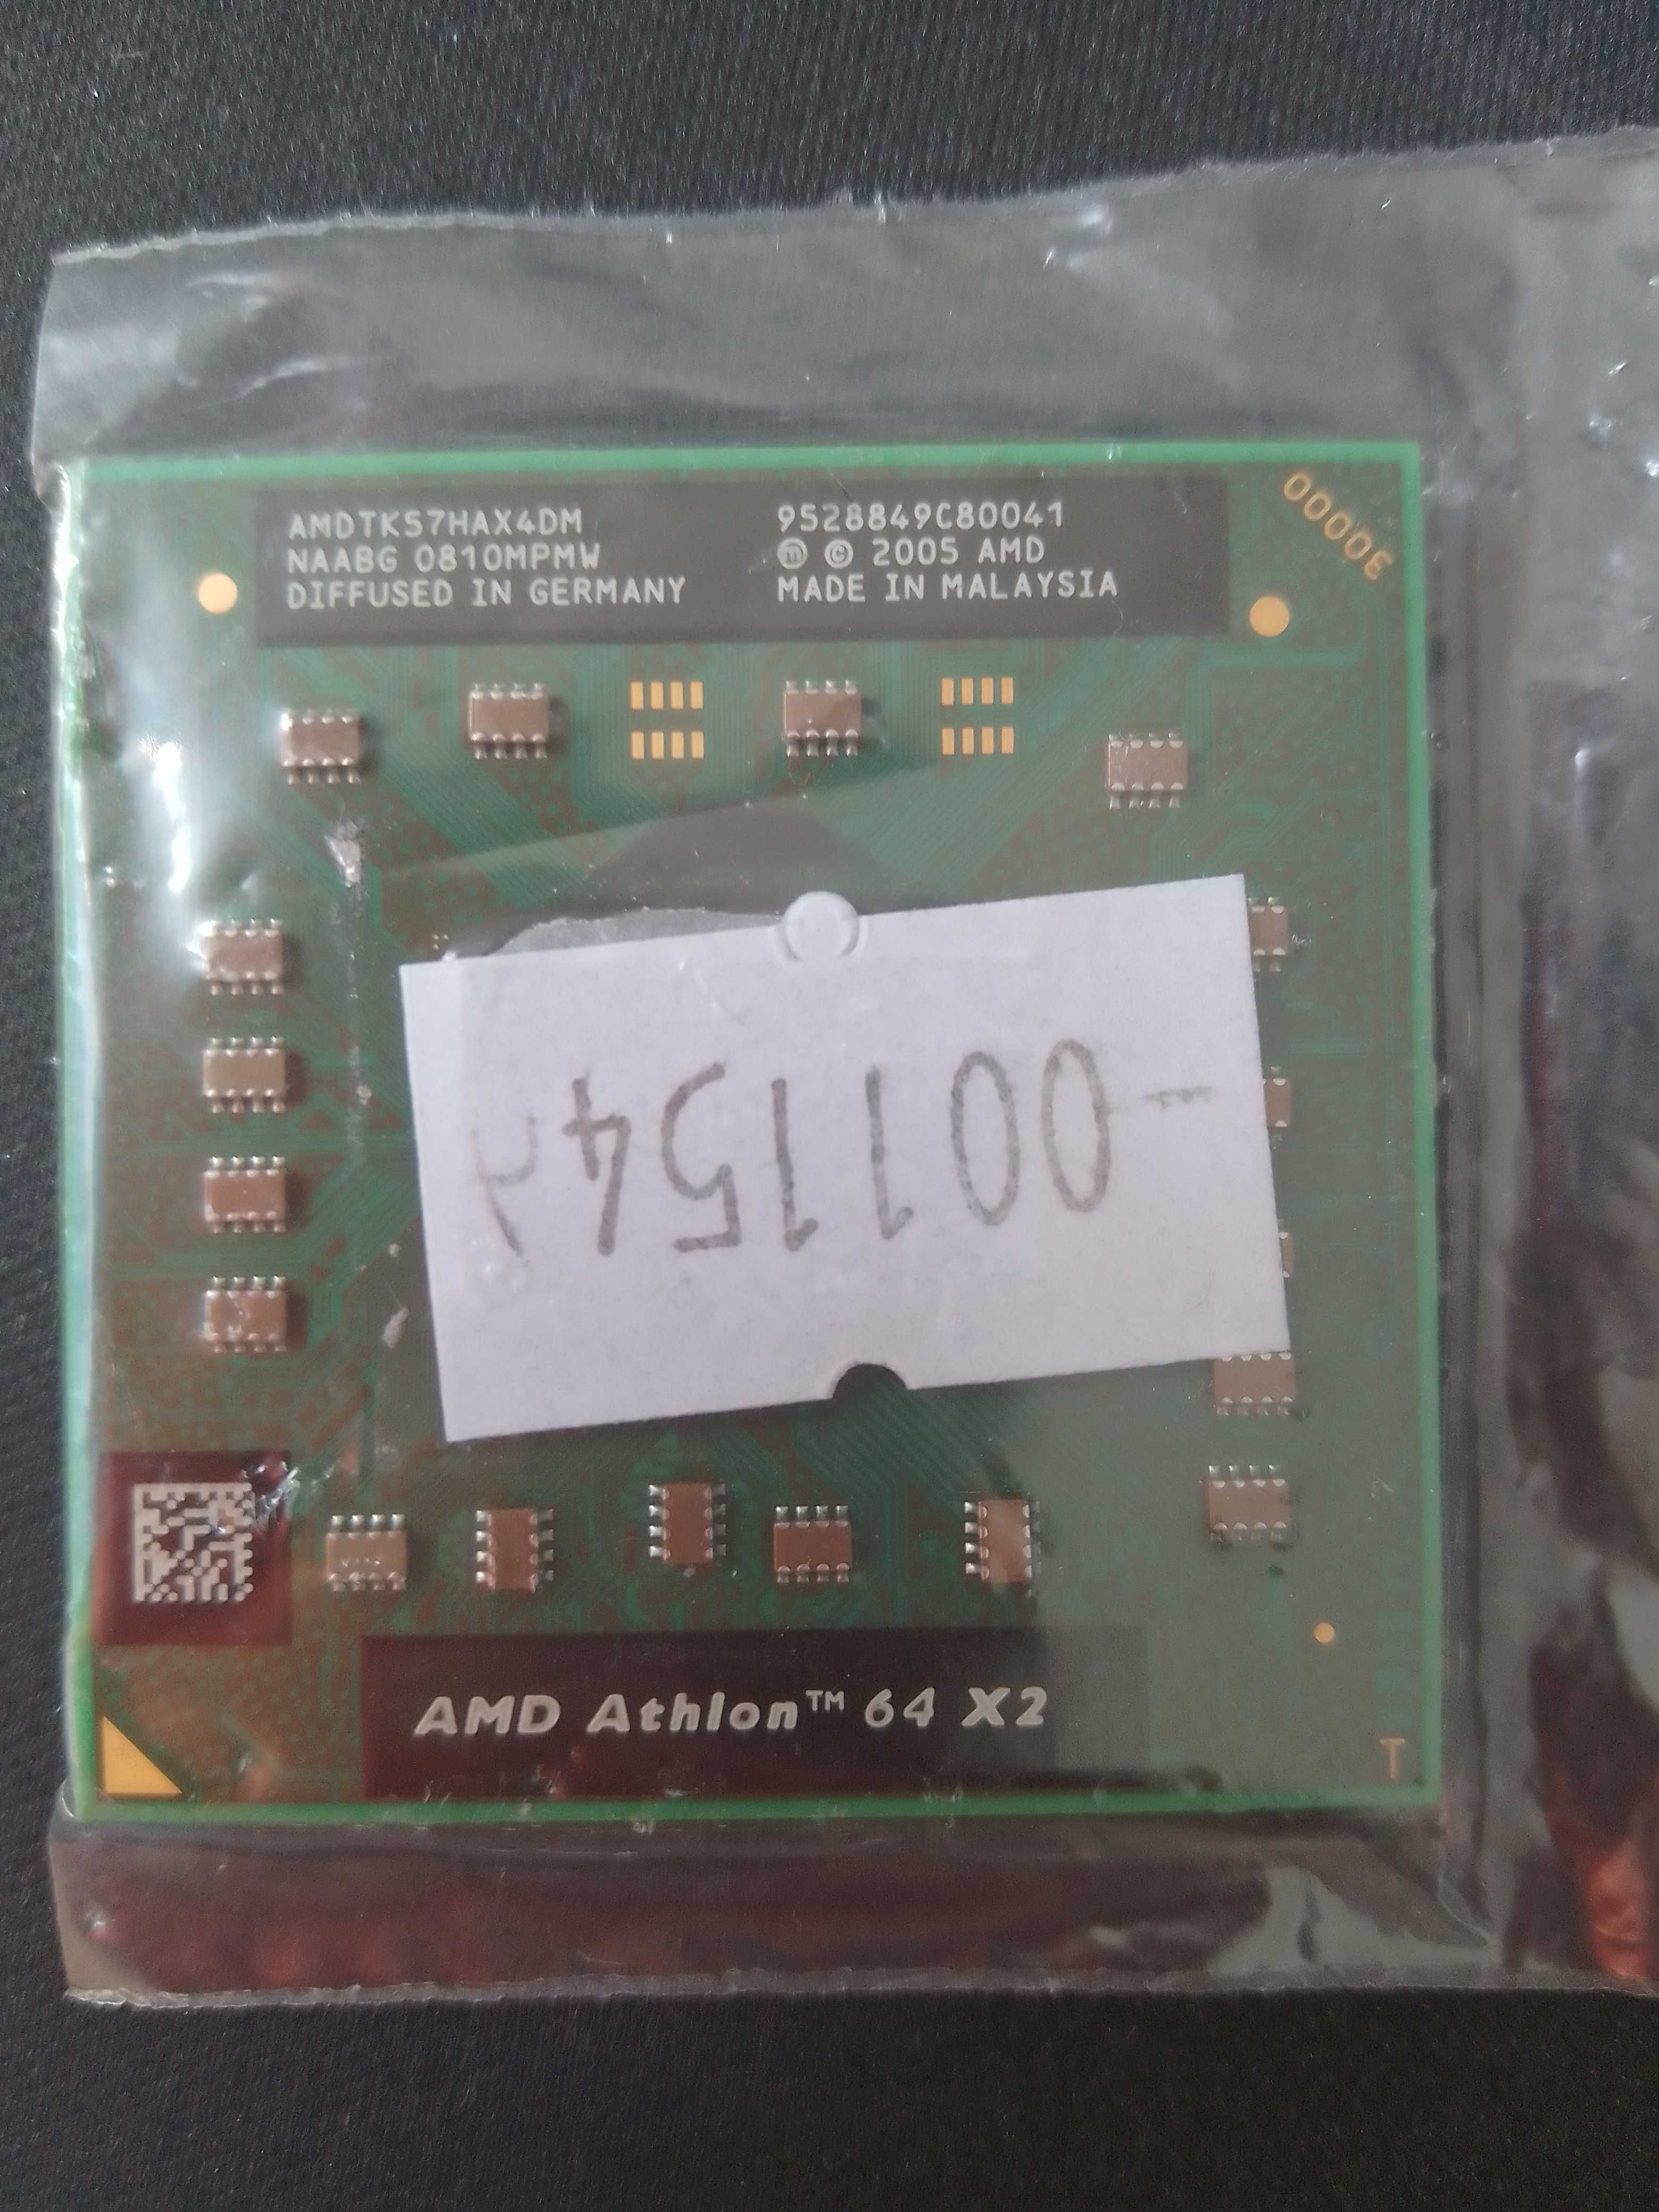 Procesor AMD Athlon 64 x2	AMDTKS7HAX4DM 2r 2w  1.90 GHz (001154)